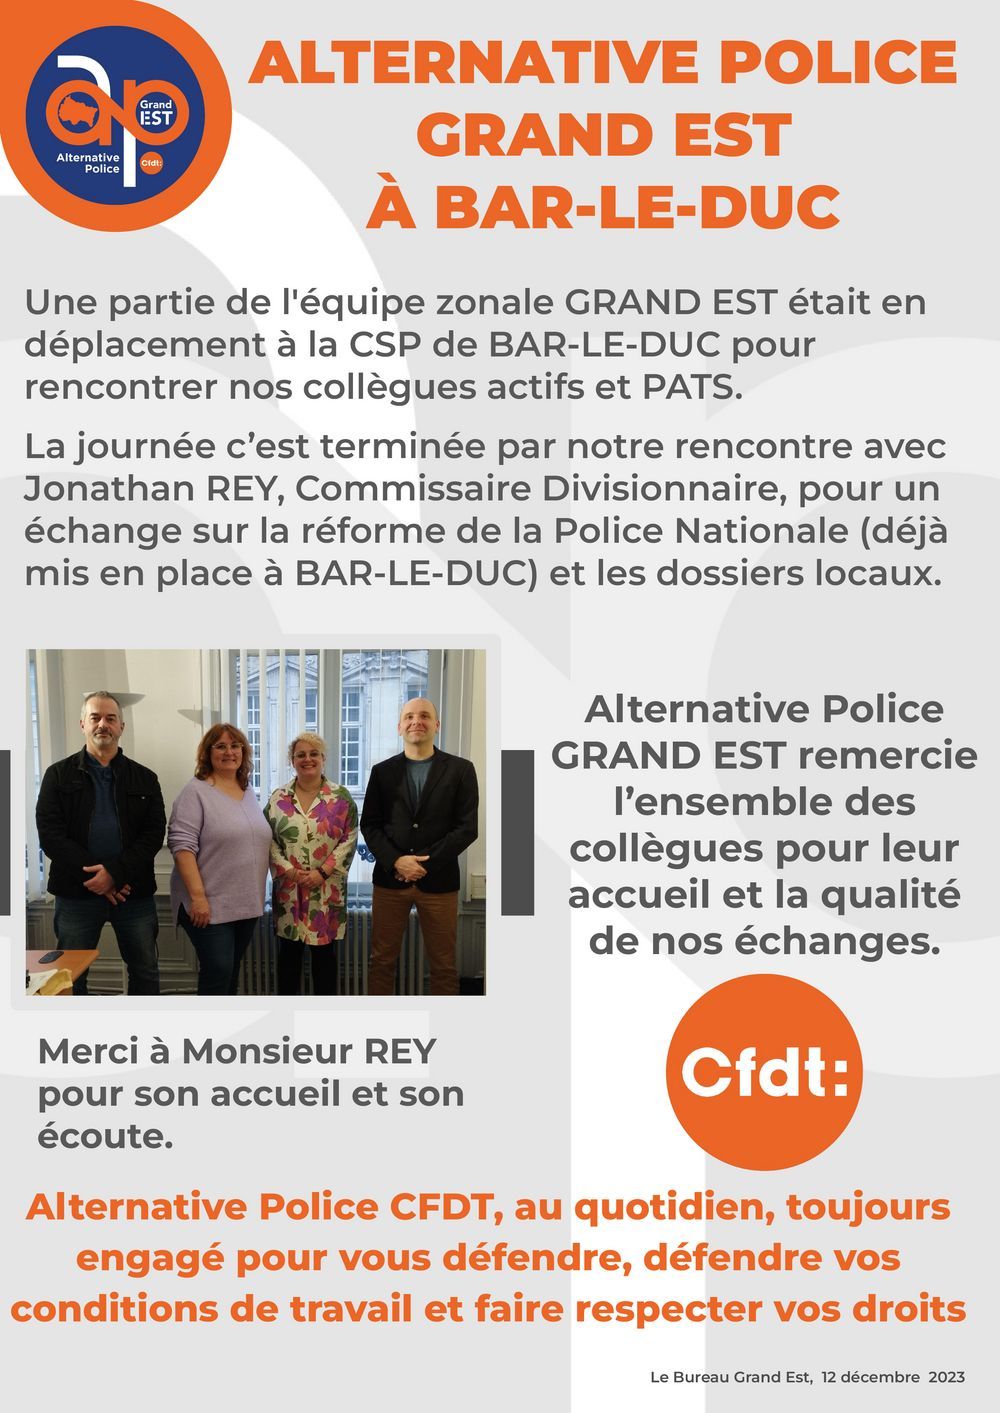 ALTERNATIVE POLICE CFDT GRAND EST À BAR-LE-DUC